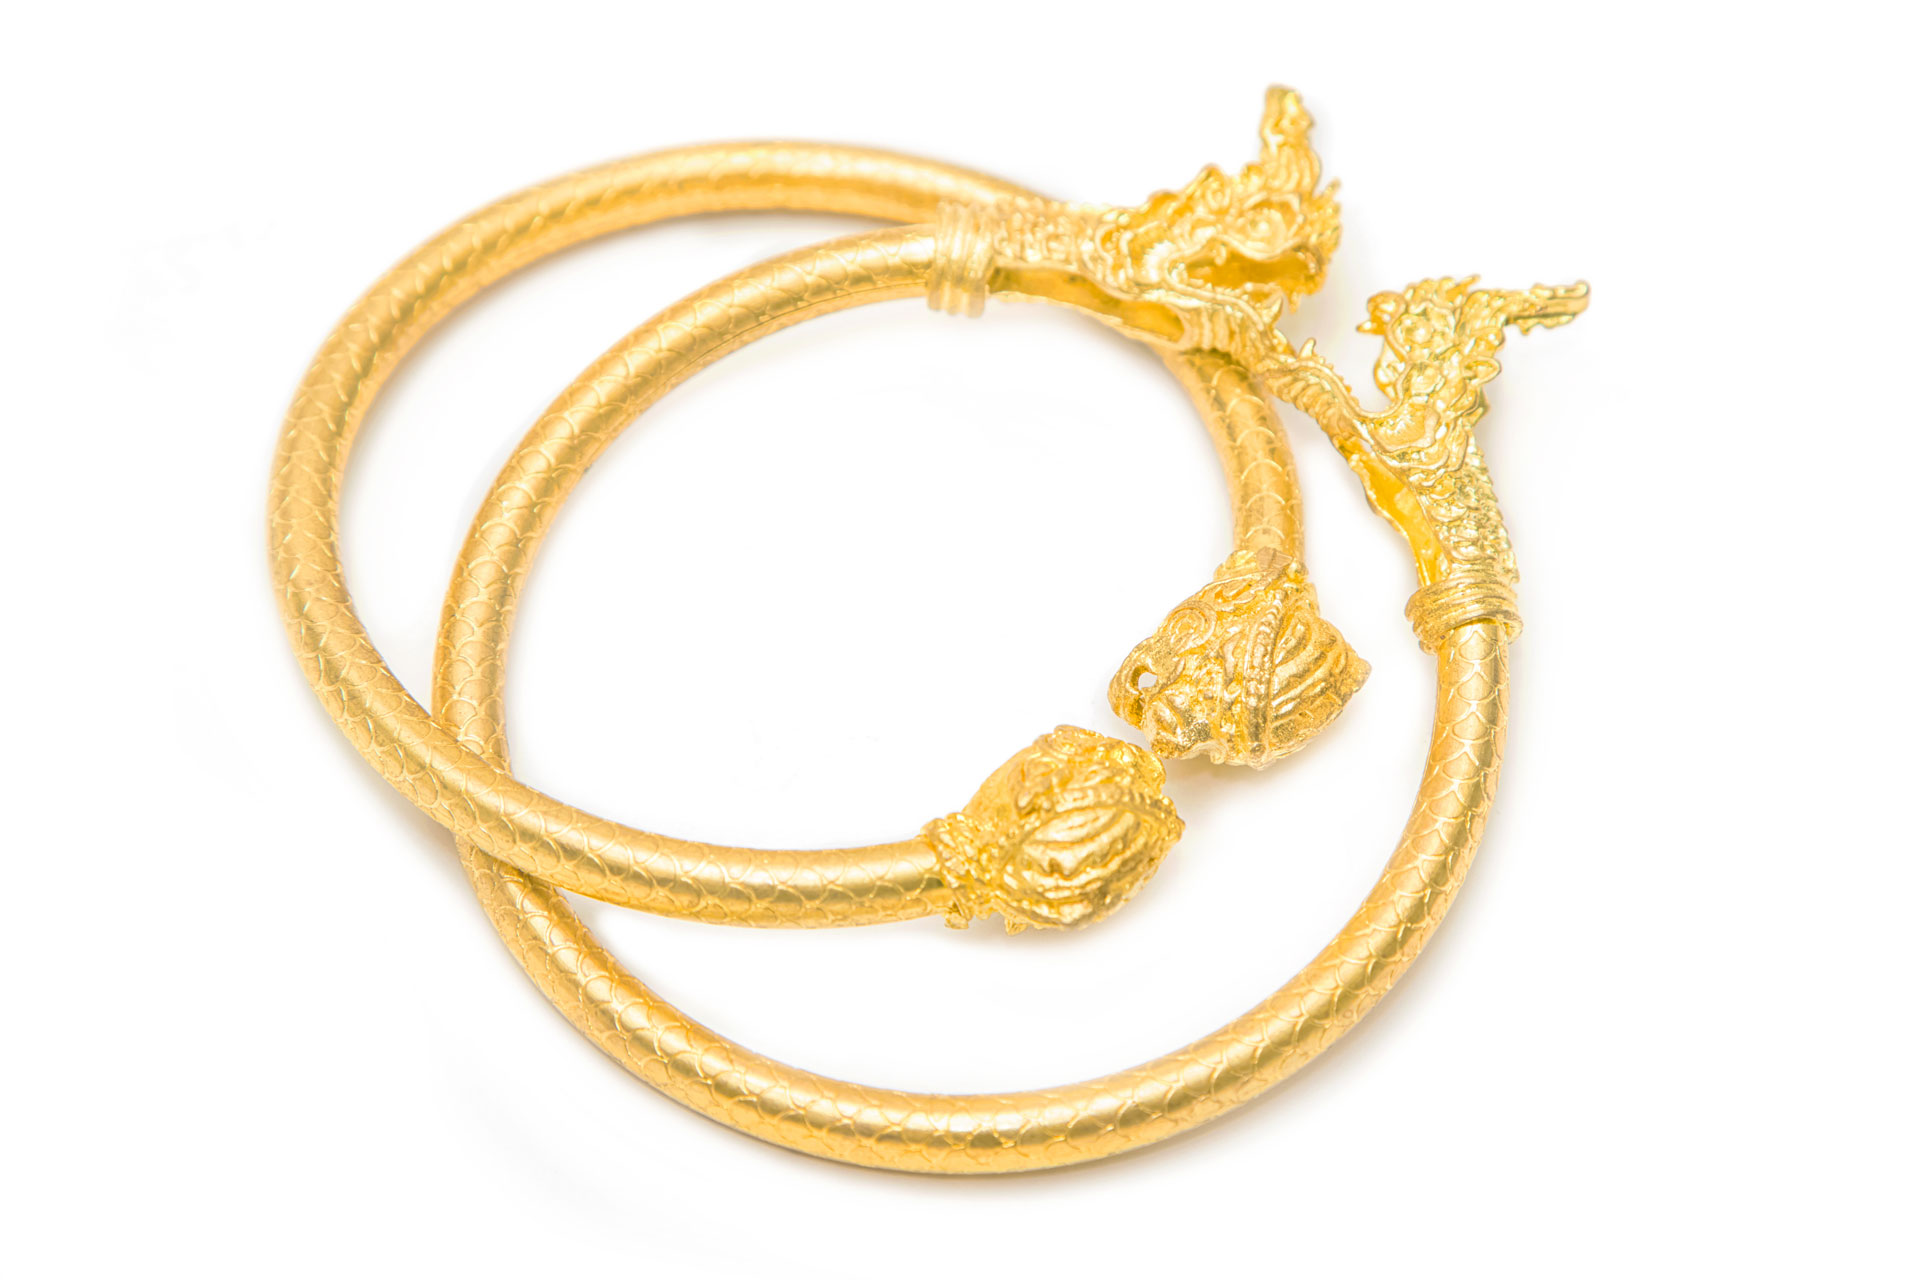 Gold bracelets intertwined